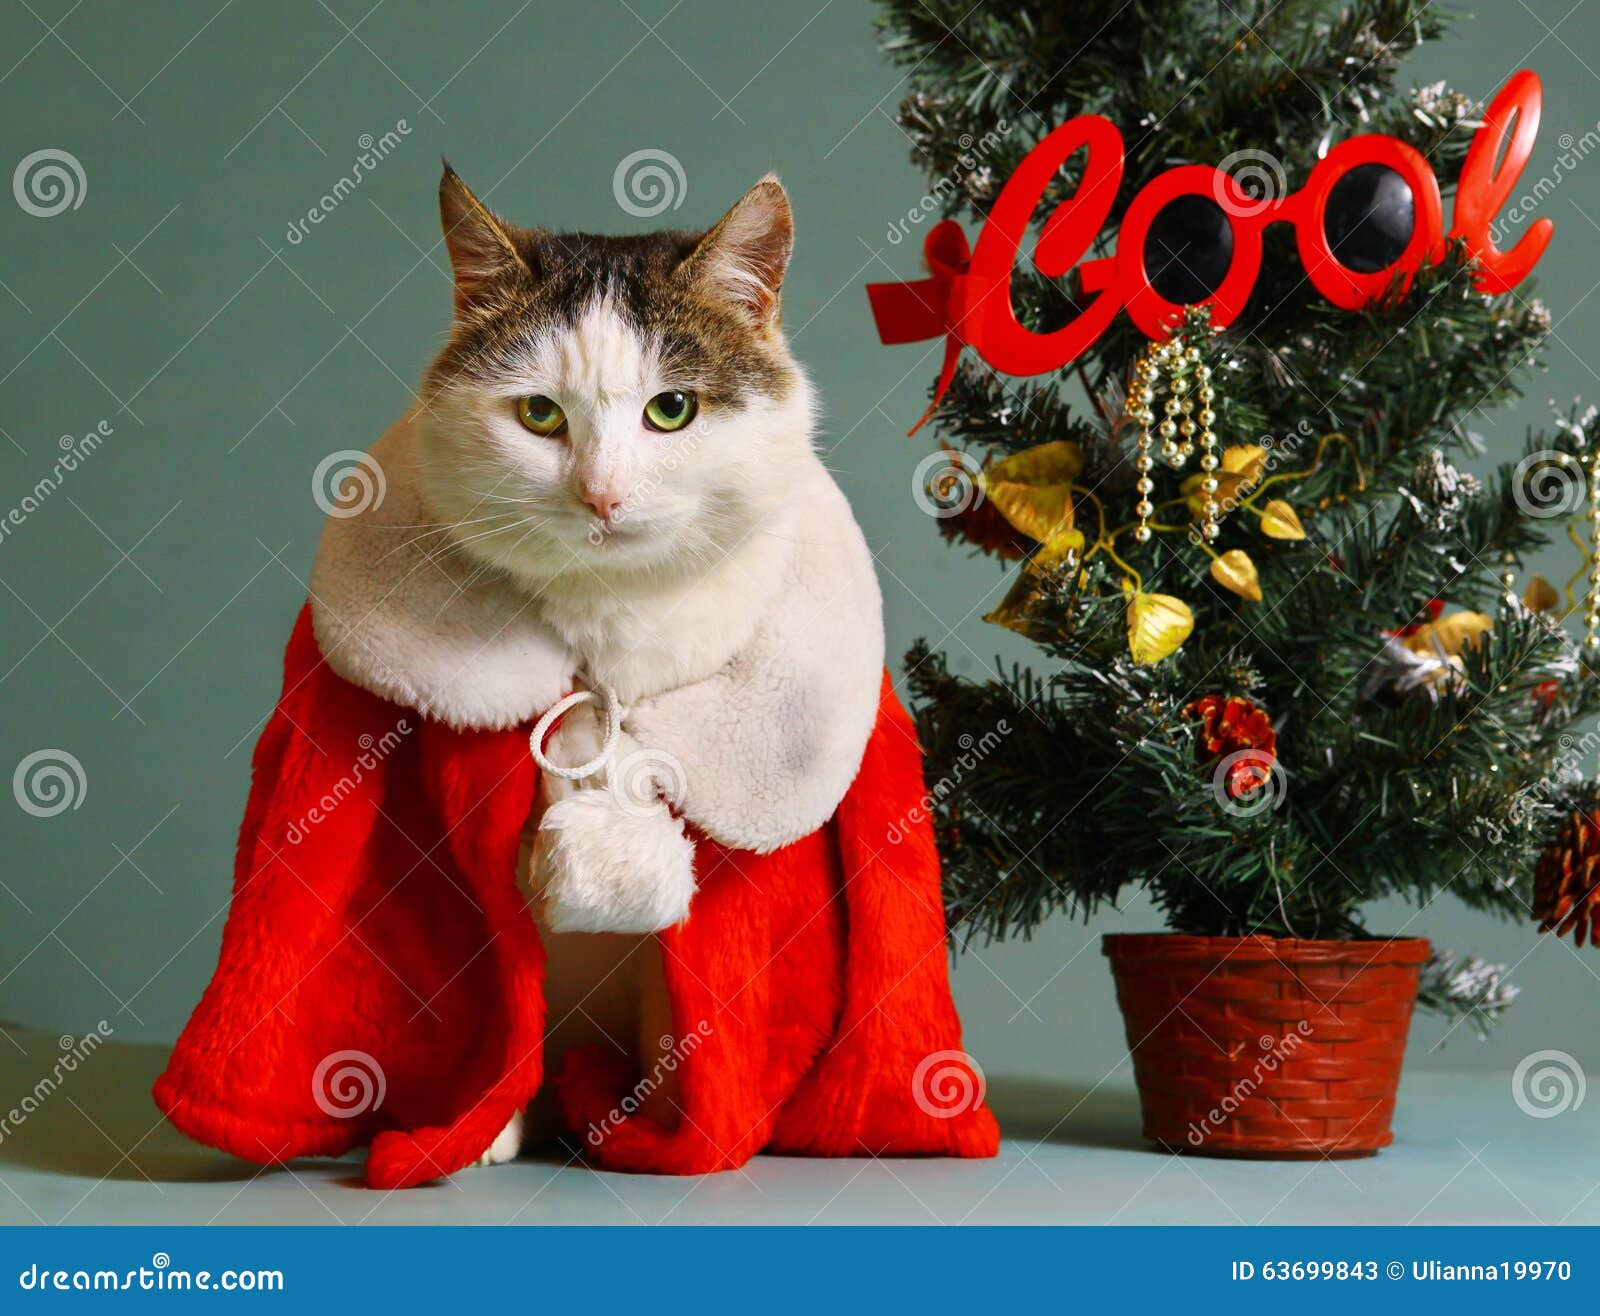 Download Cool Tom Cat In Santa Claus Garment Mantel Stock Image Image of christmas